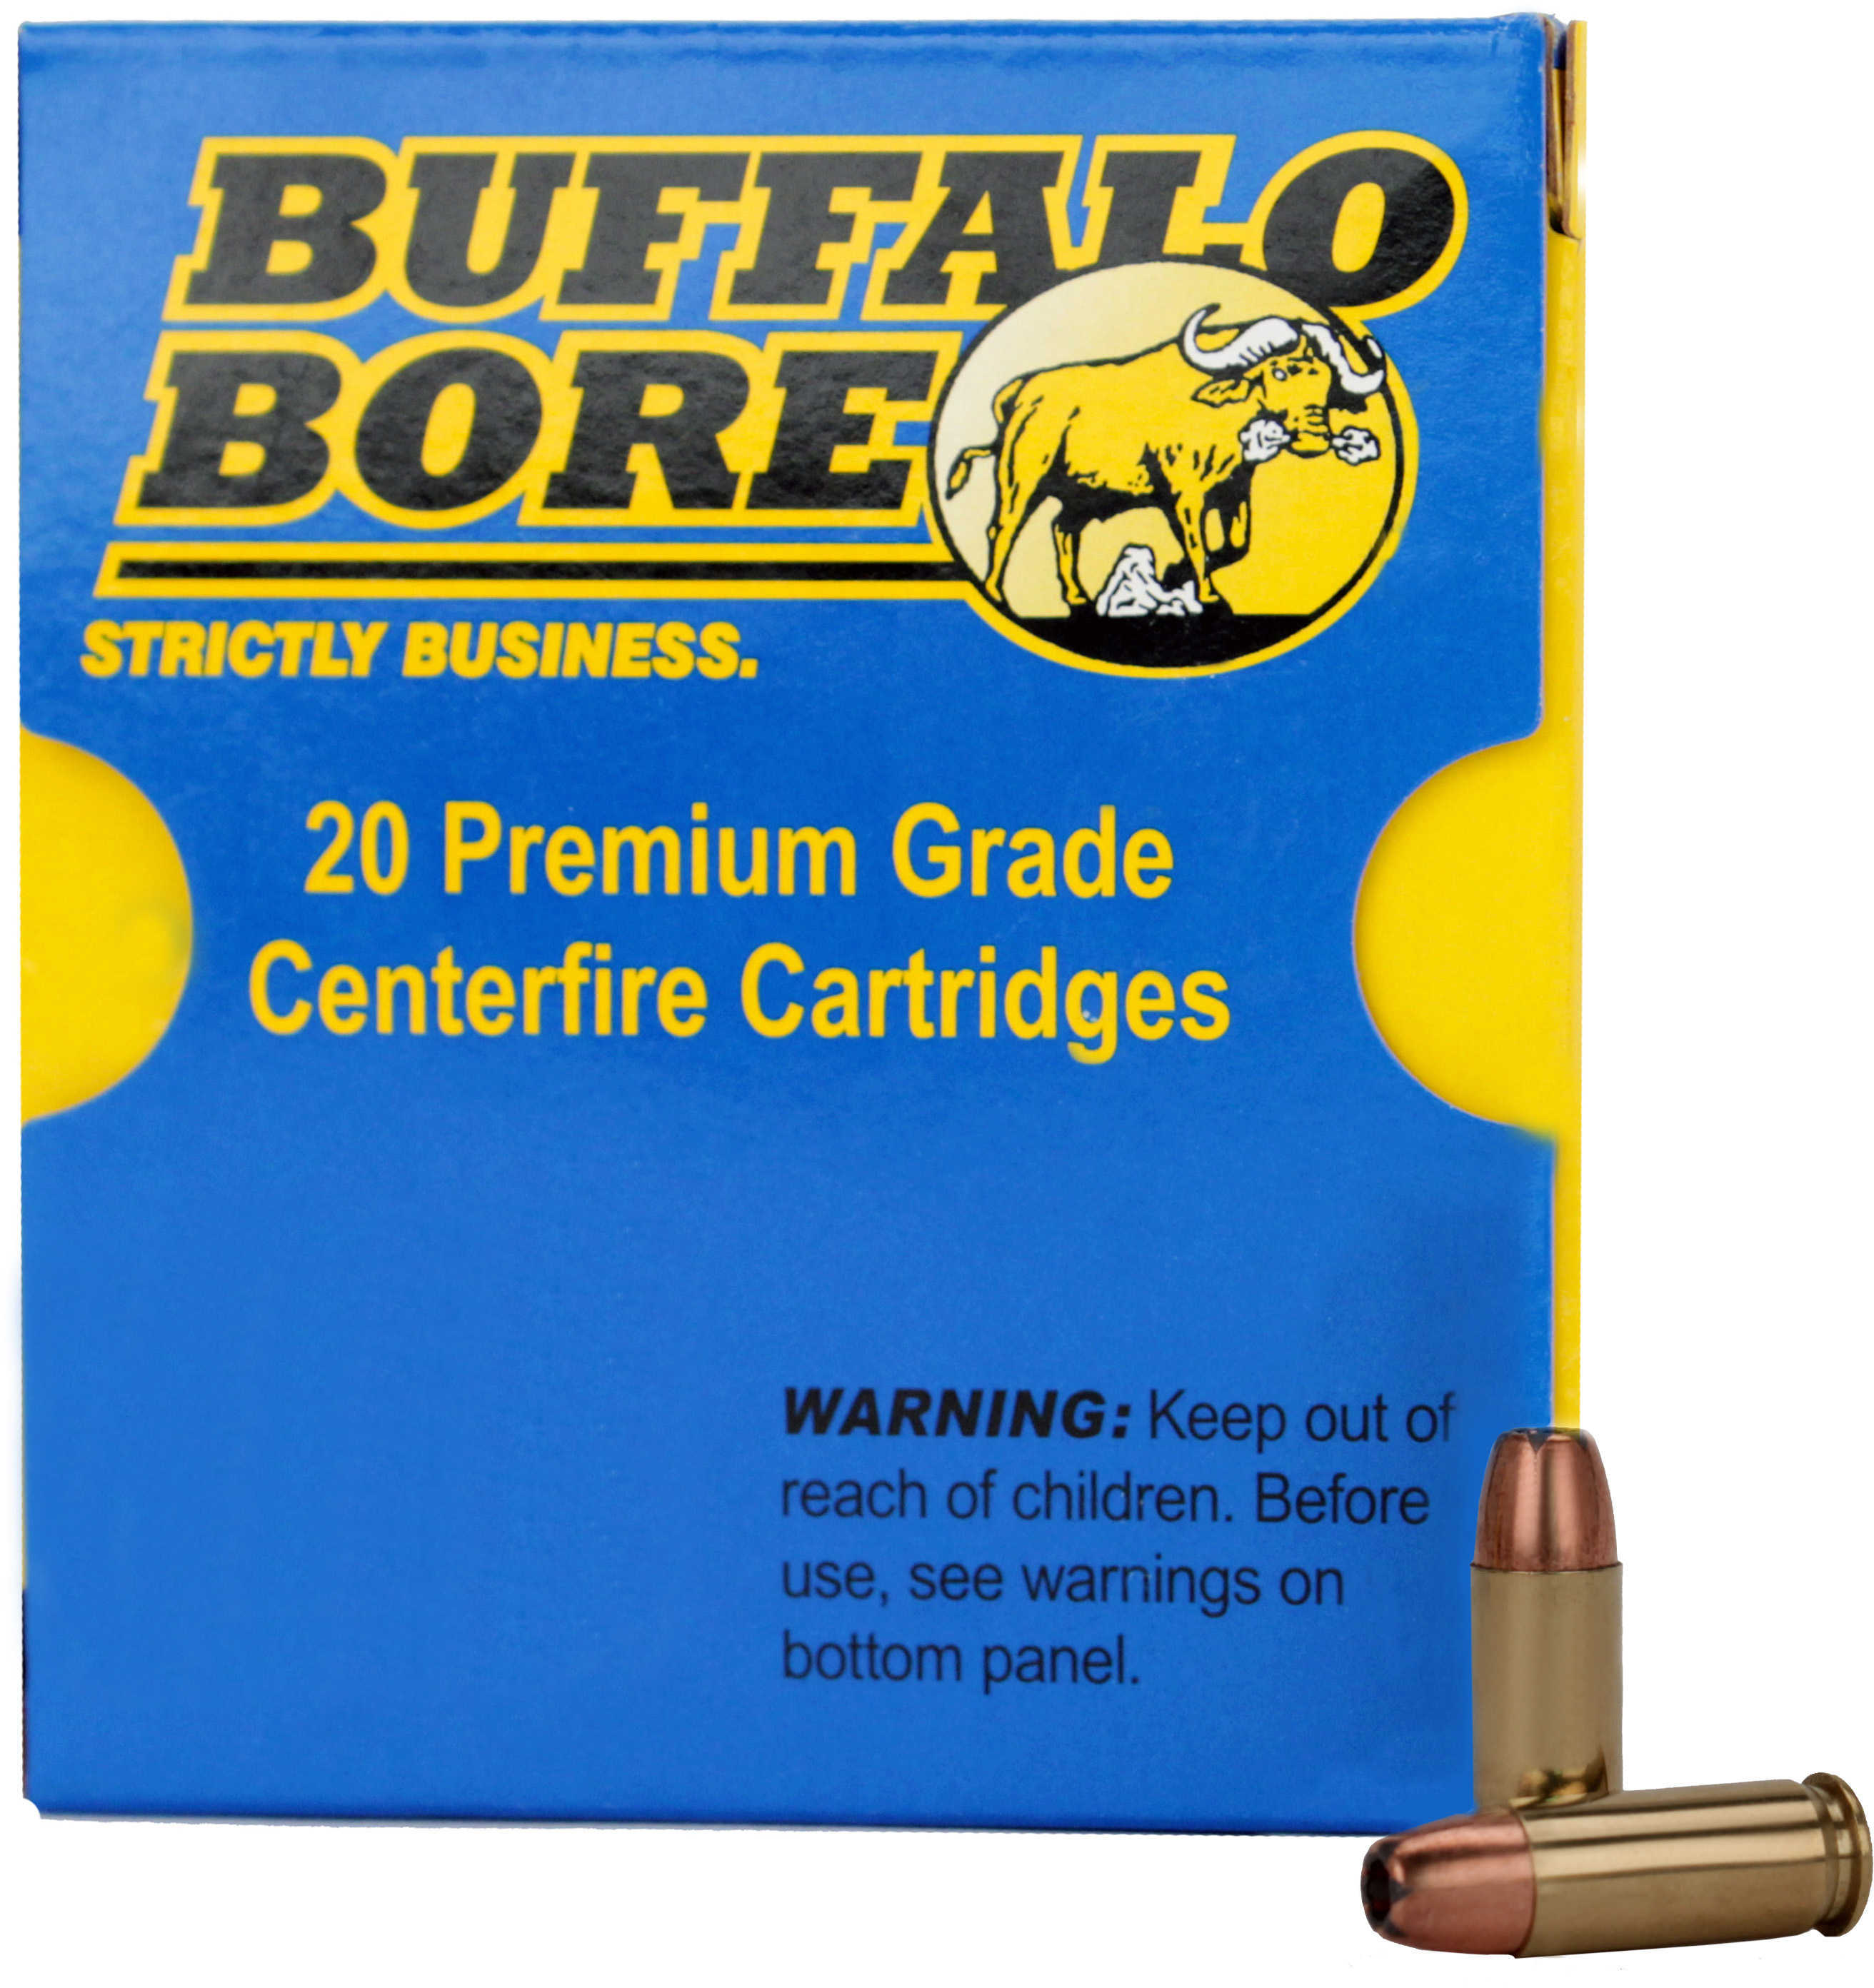 38 Super Automatic 147 Grain Hollow Point 20 Rounds Buffalo Bore Ammunition